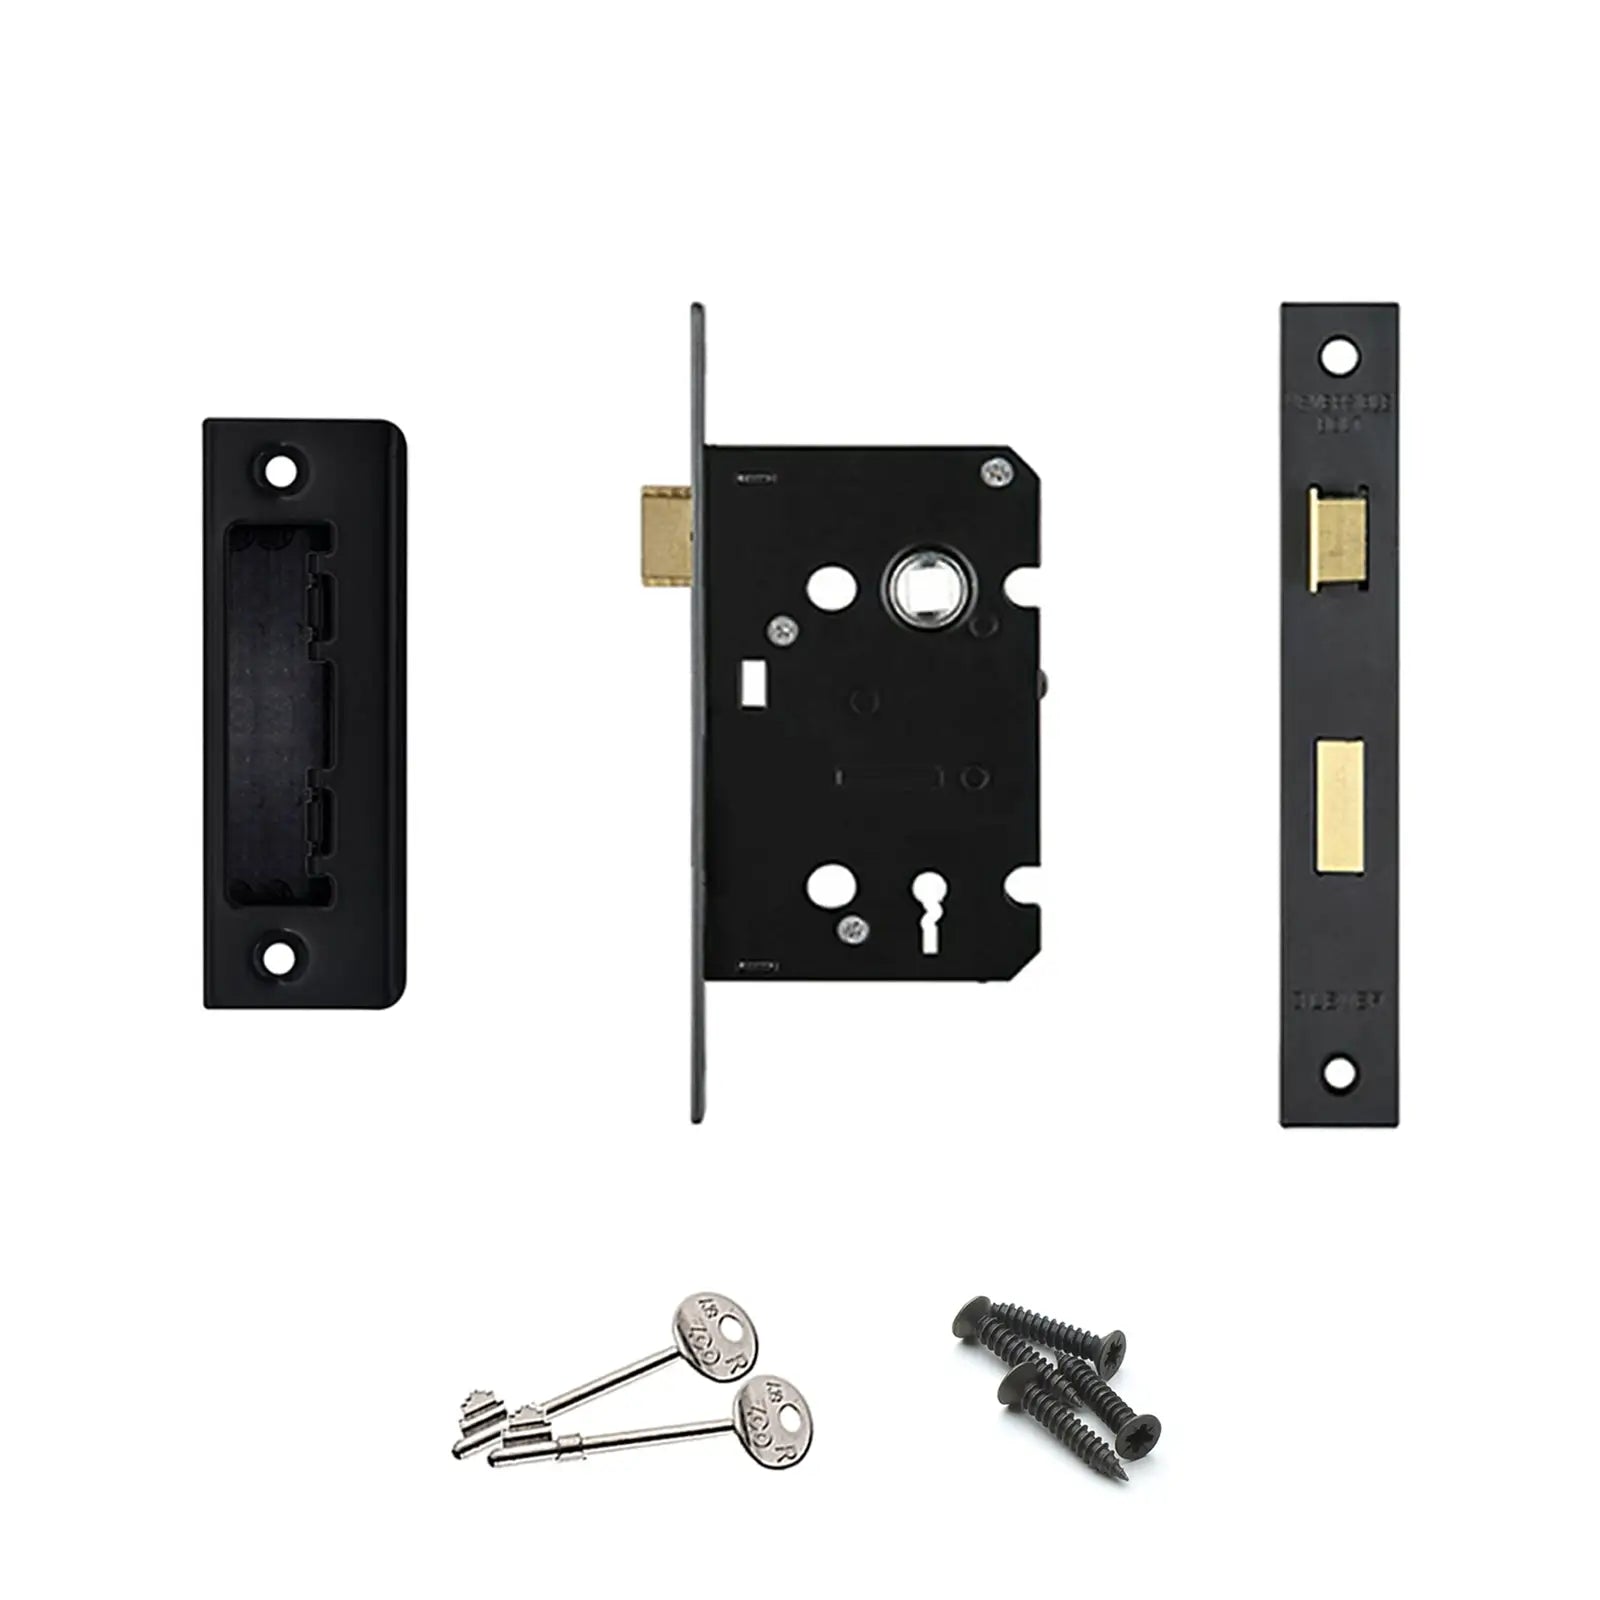 Spectra Matt Black Privacy Door Lever Handles - Sash Lock Kit Set - Decor And Decor